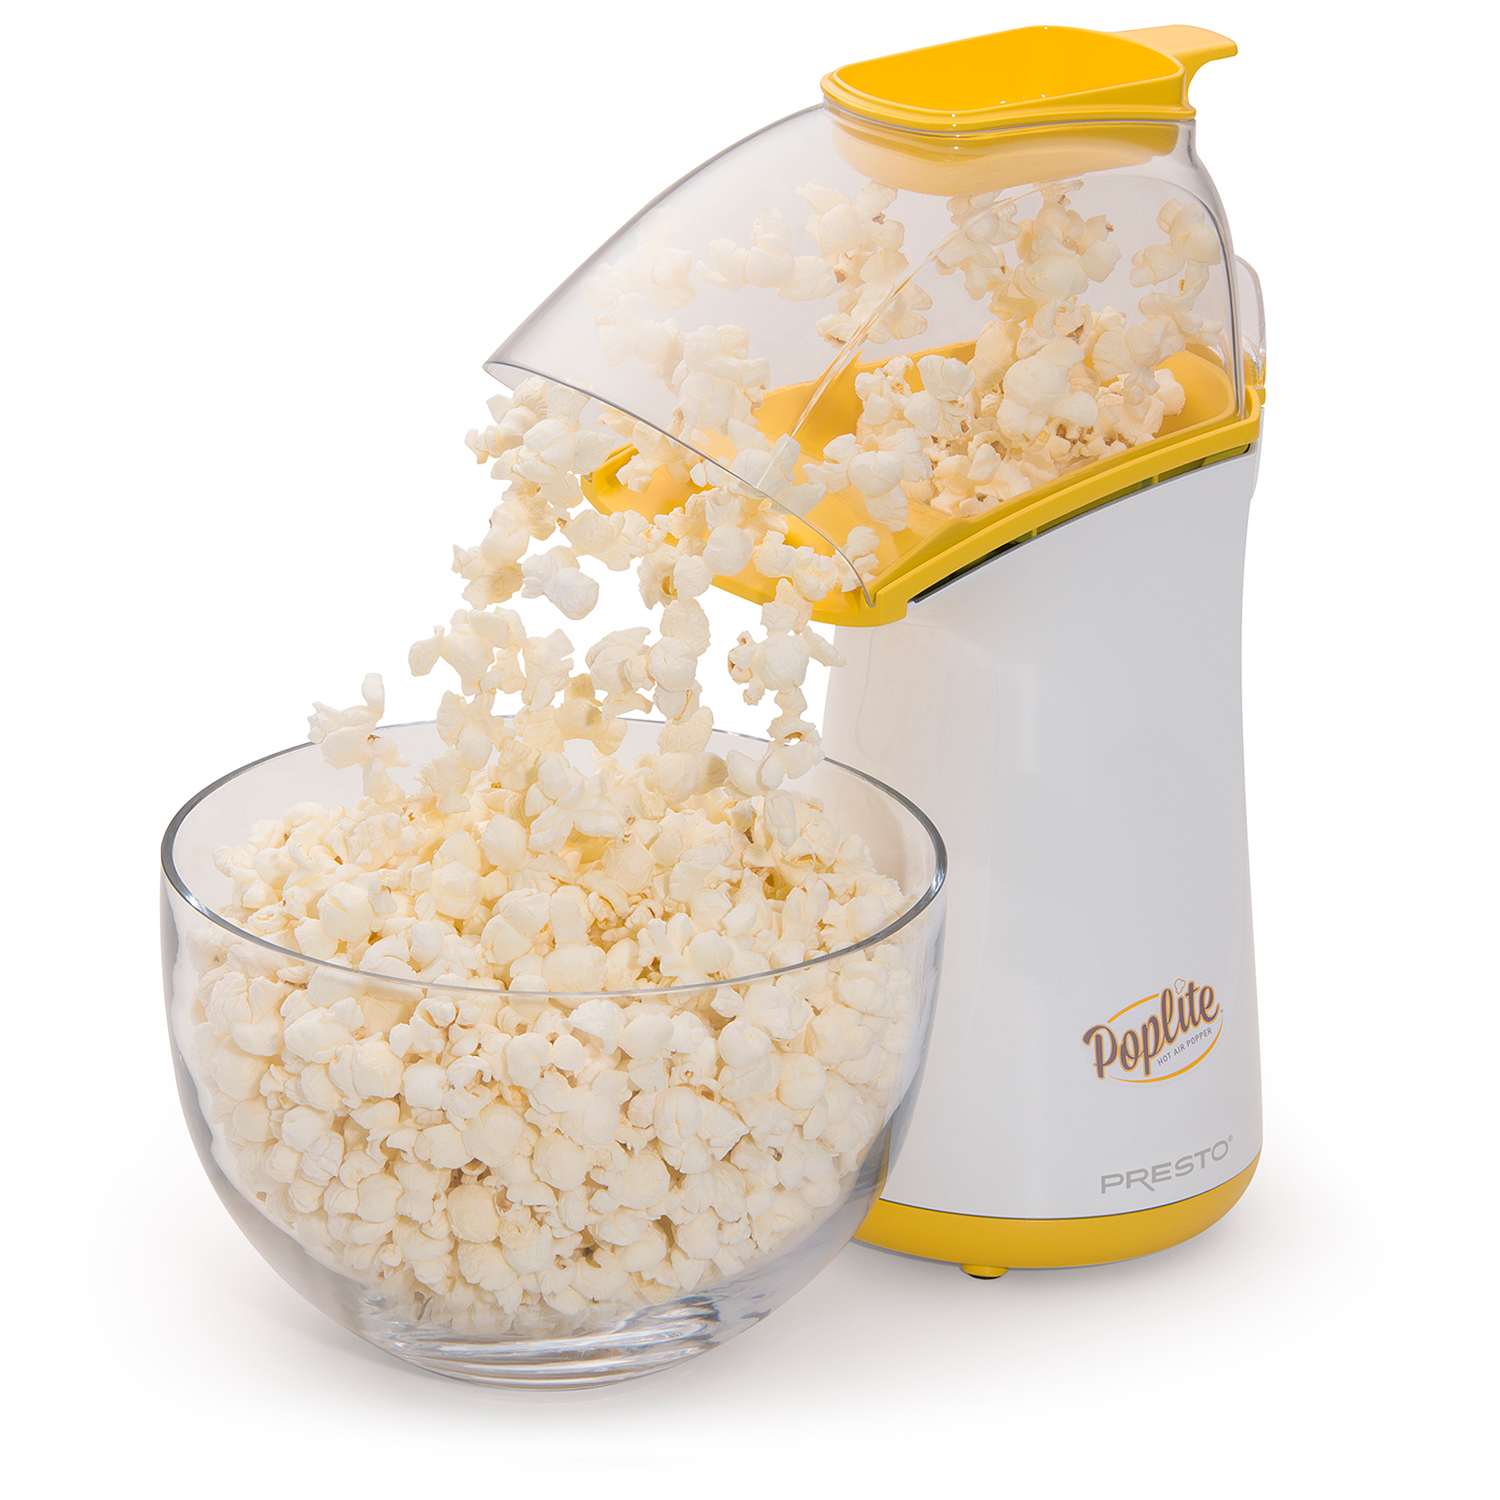 Presto poplite hot air popcorn popper 18 cups in less than 2 1/2 minutes,  new